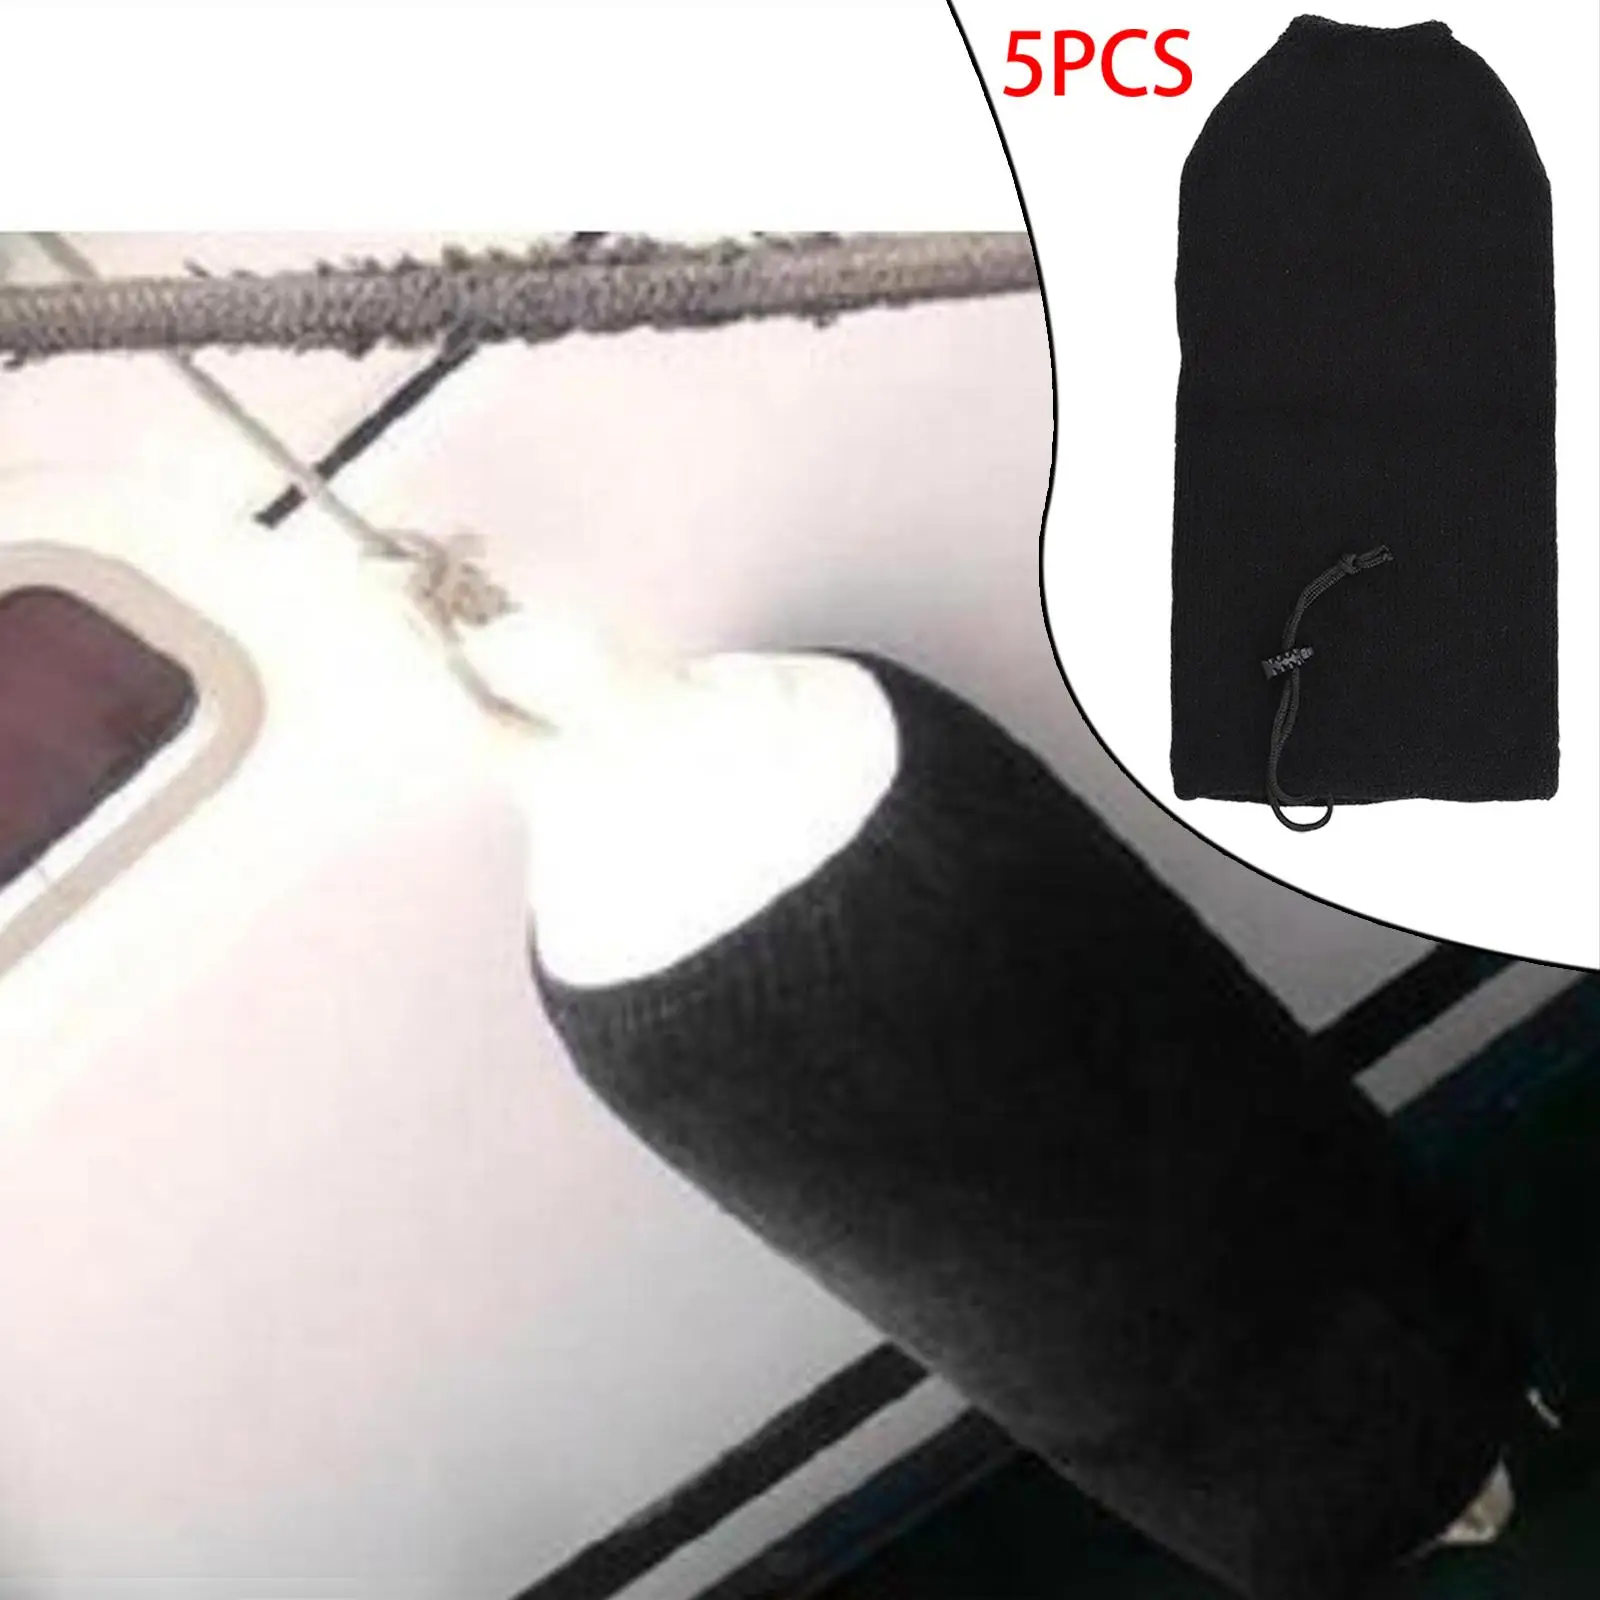 5 Bumper Cover, Soft Acrylic Ball Sleeve Woven Cover Black Protection  for Marine Bumper Yacht Salt Protection Sun 